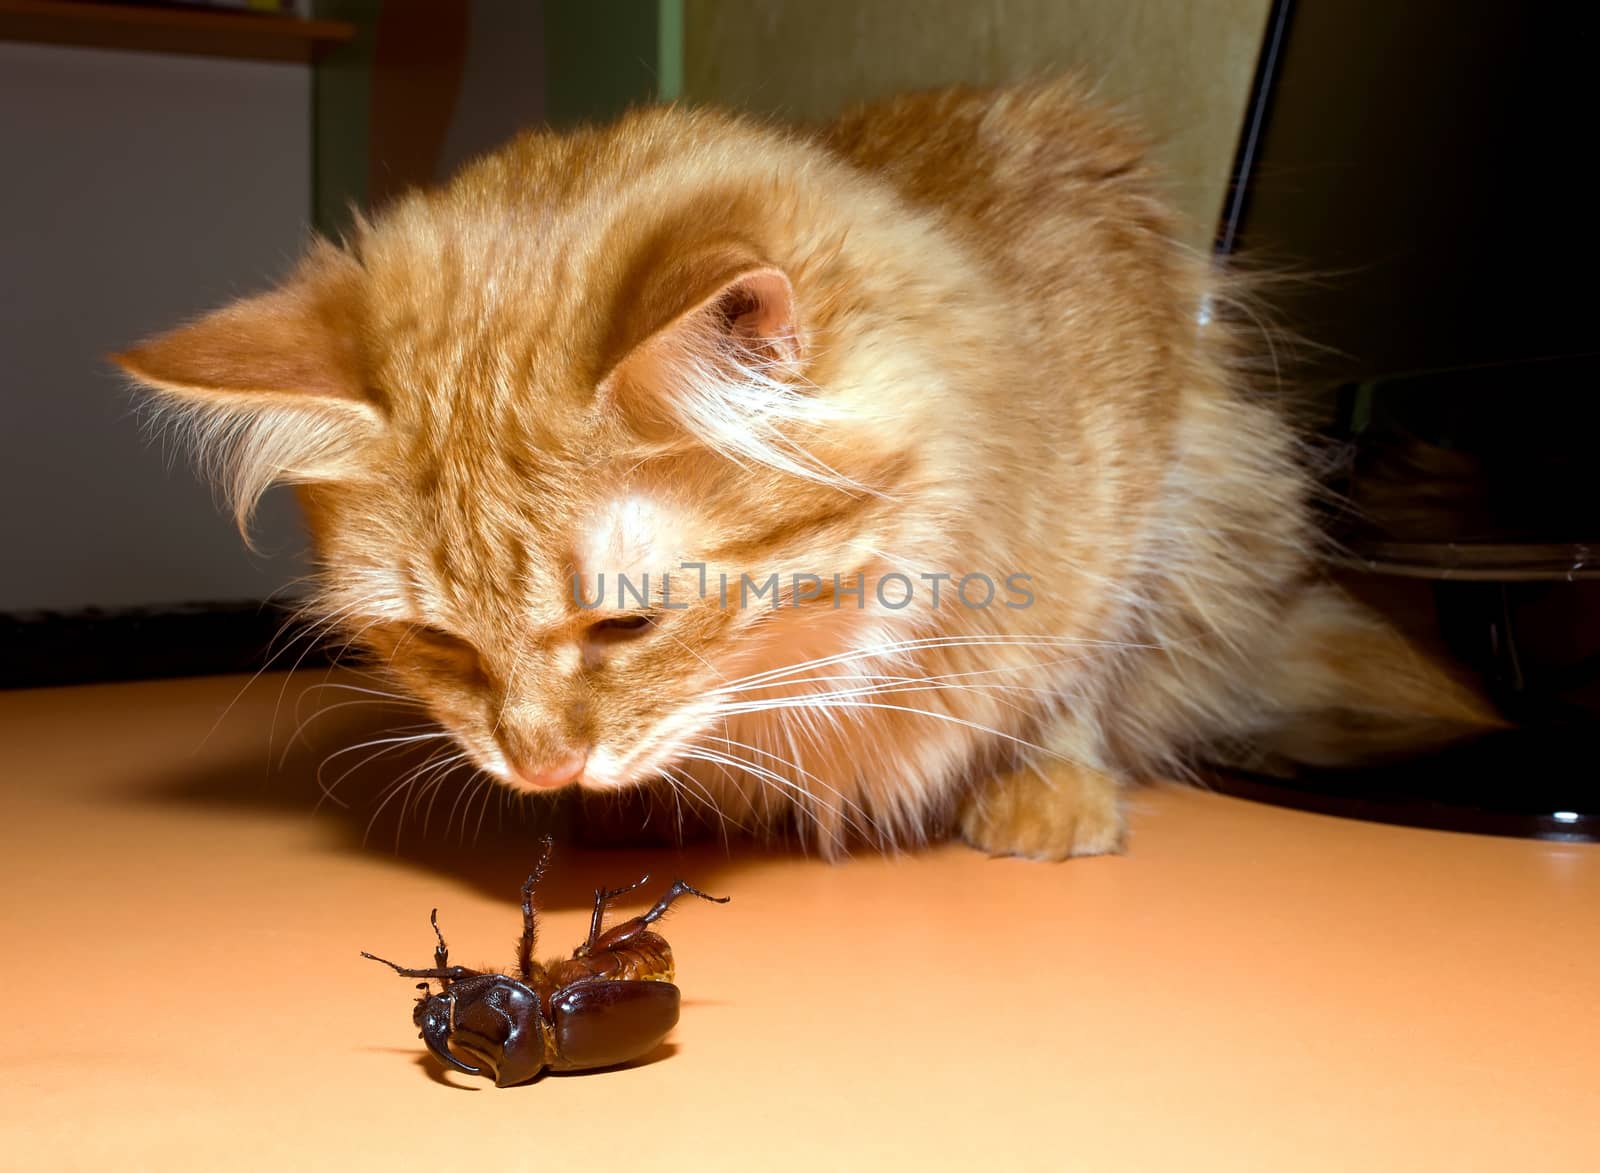 Cats beetle by Krakatuk